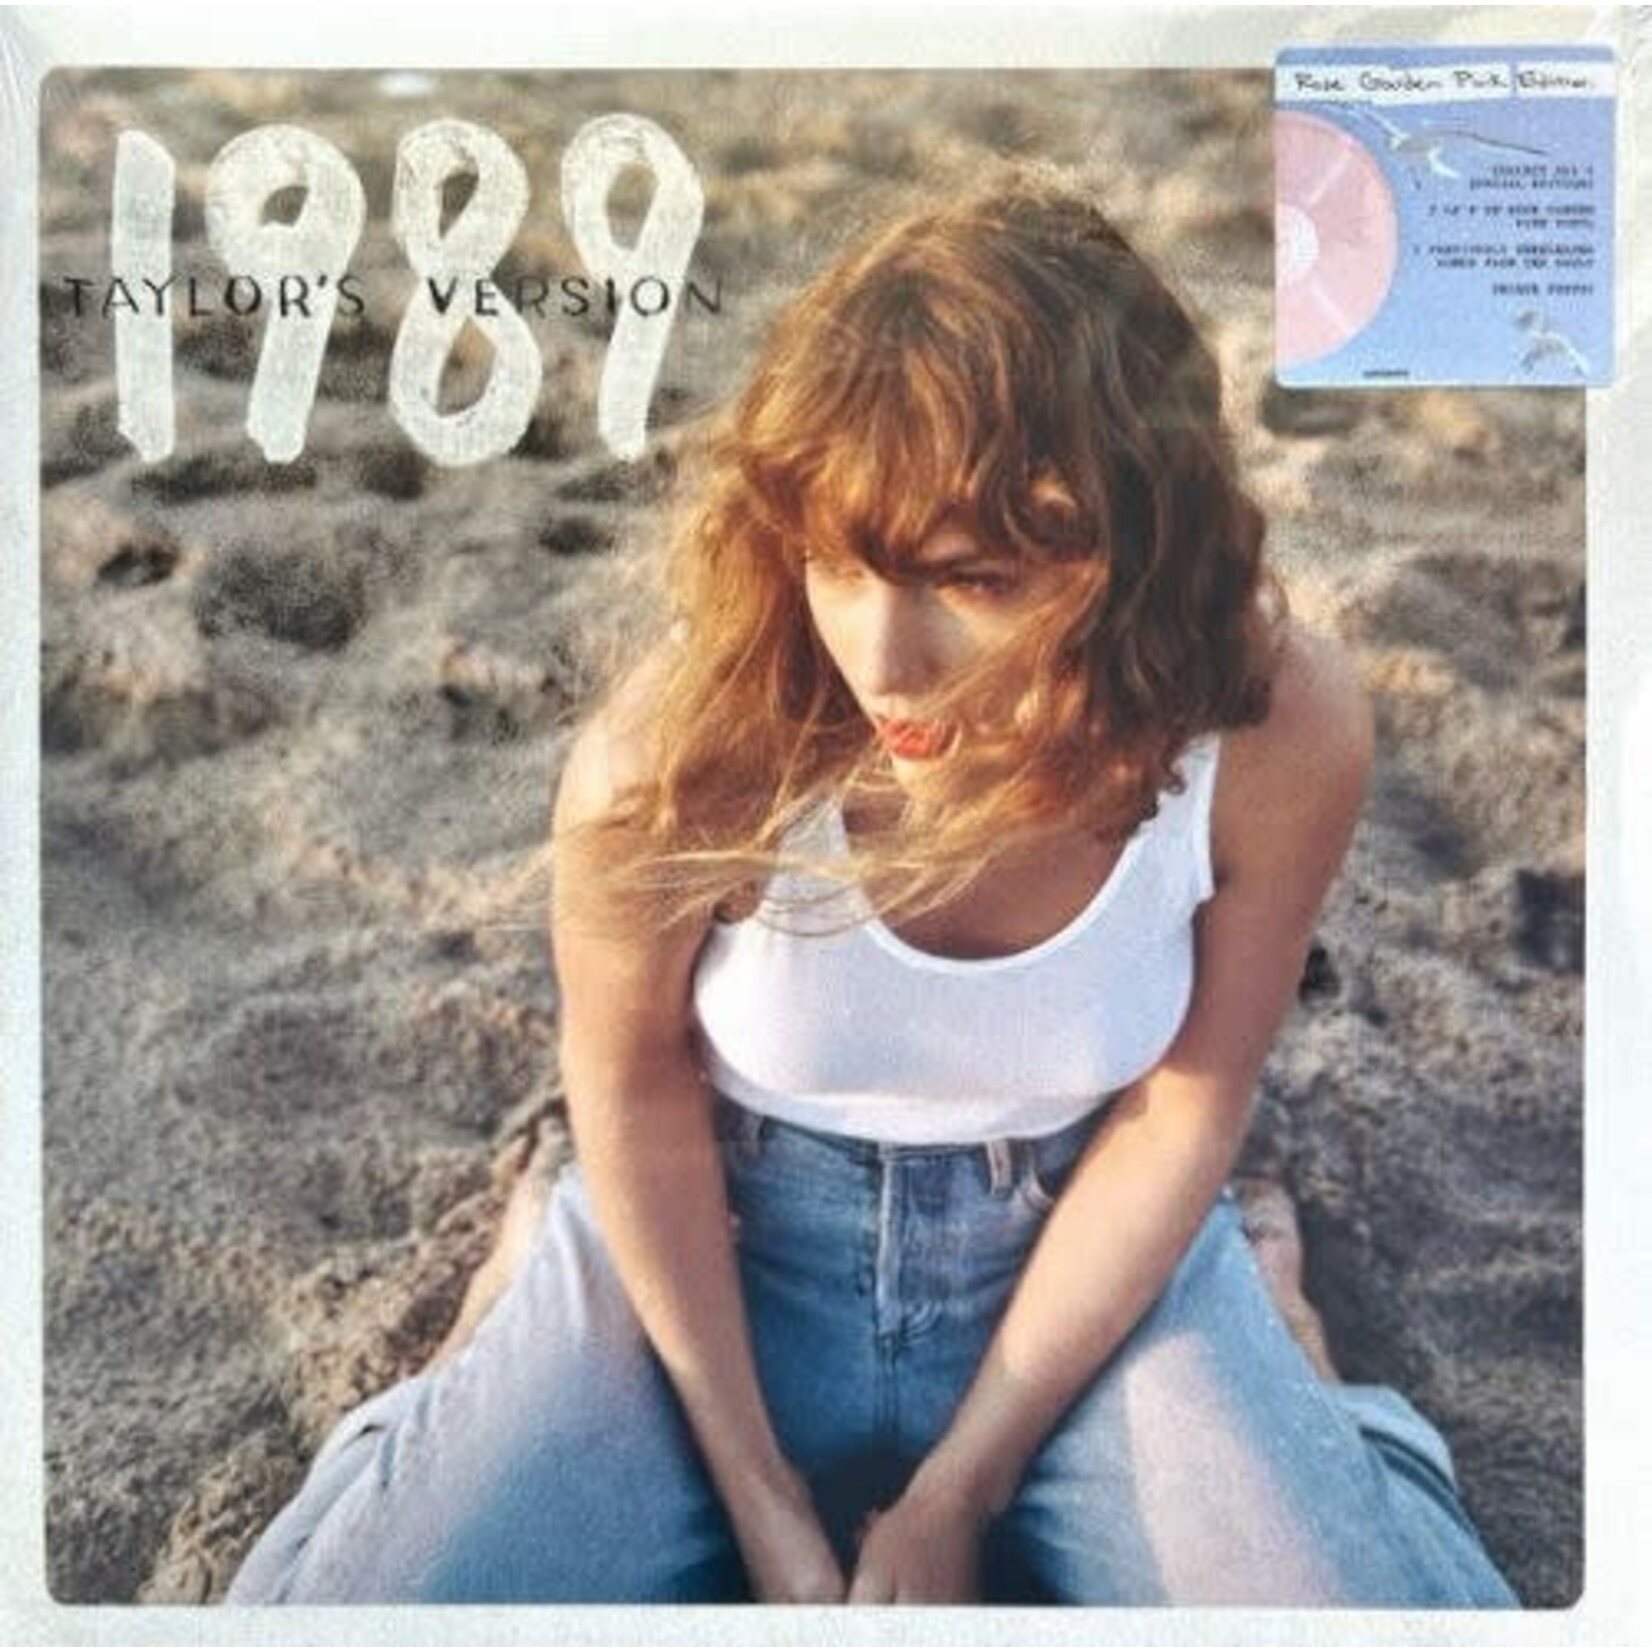 [New] Swift, Taylor: 1989 - Taylor's Version (2LP, rose vinyl) [REPUBLIC]